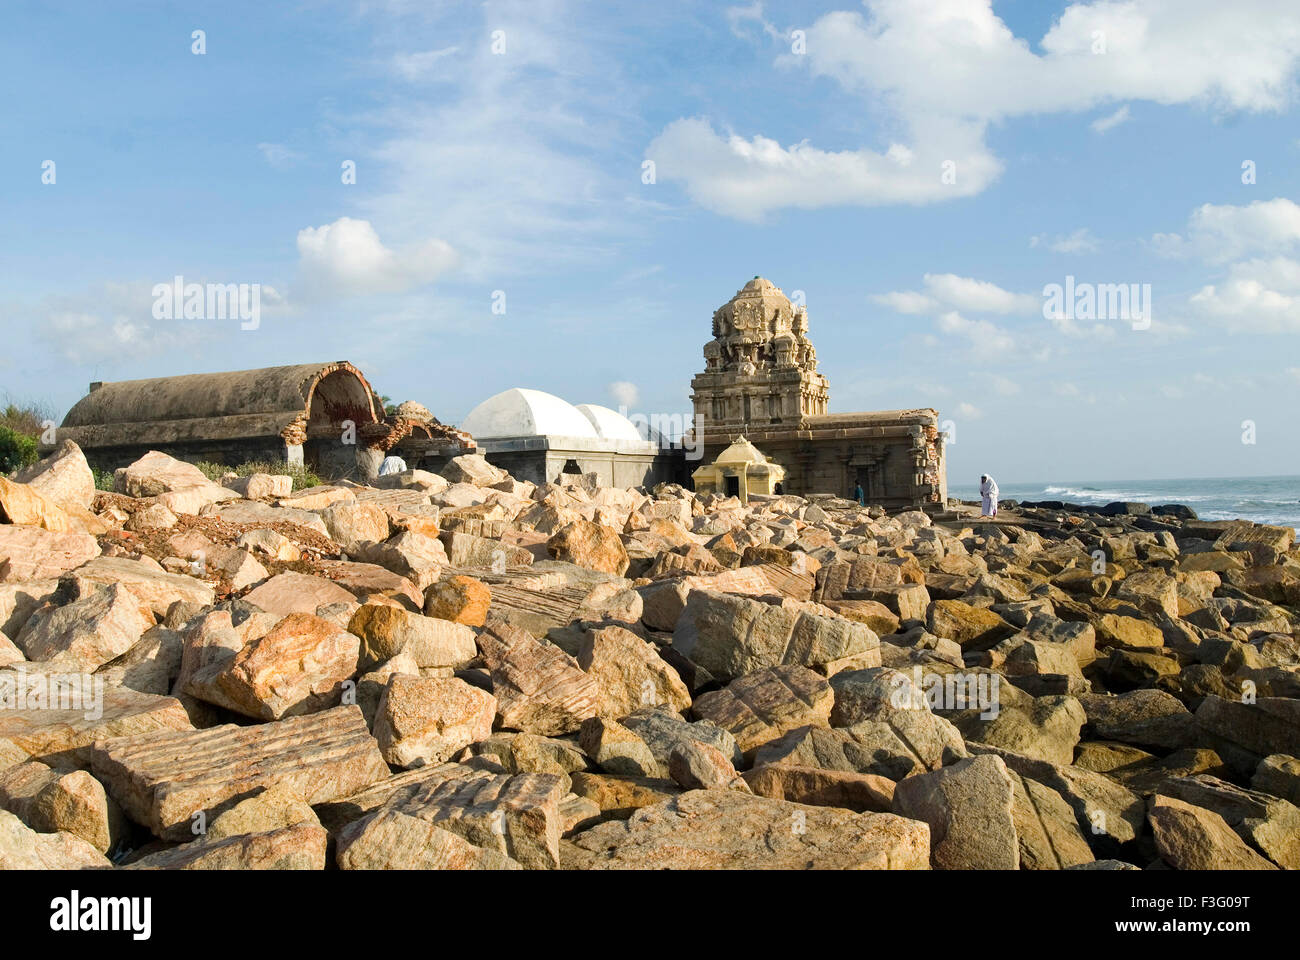 Masilamaninathar temple built in 1305 AD in Tarangambadi ; Tamil Nadu ; India Stock Photo